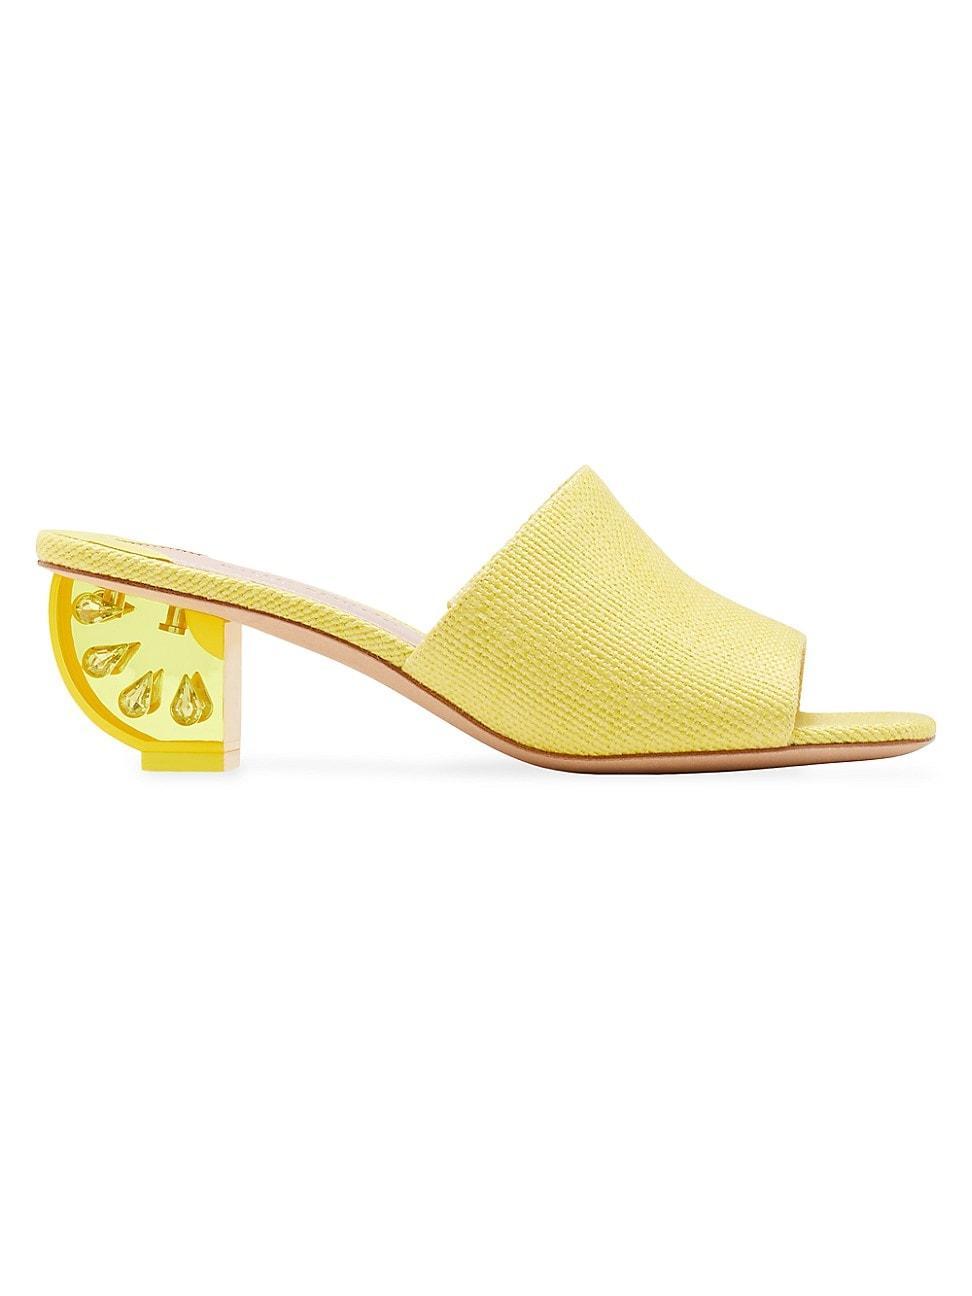 kate spade new york citrus sandal Product Image